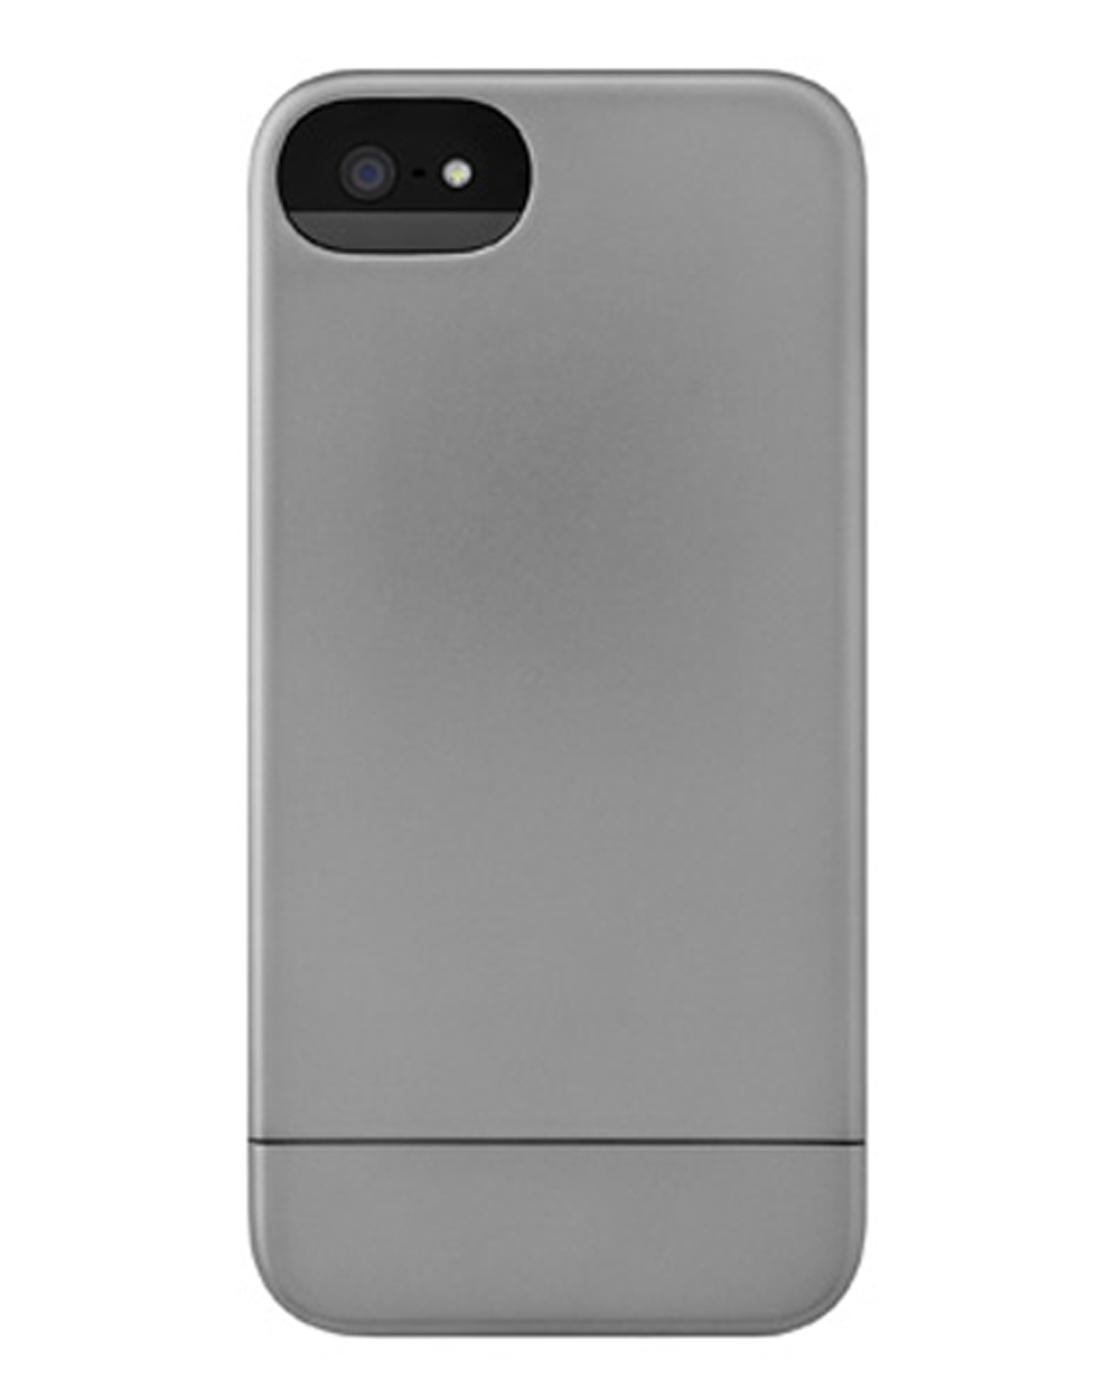 Foto Funda de iPhone 5 gris metalizado Slider Case foto 548326